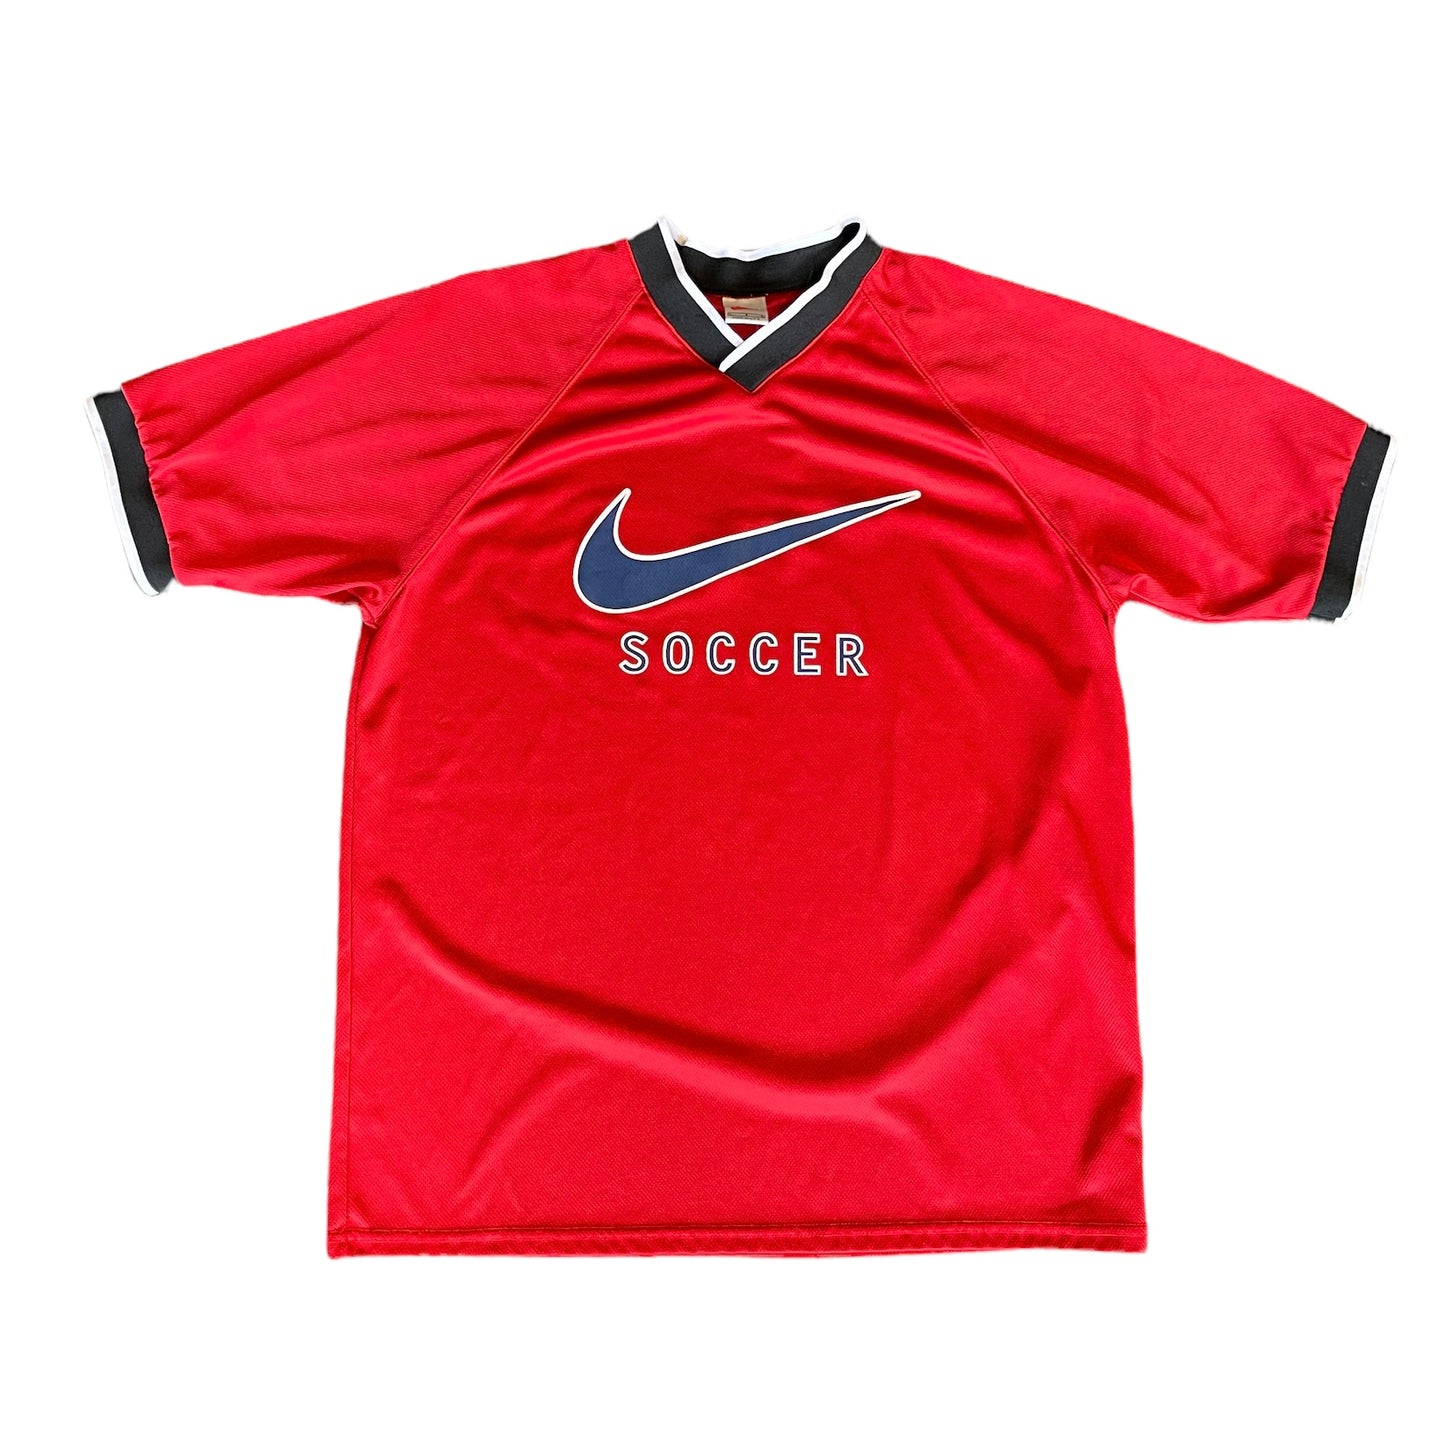 Vintage Nike Soccer Jersey